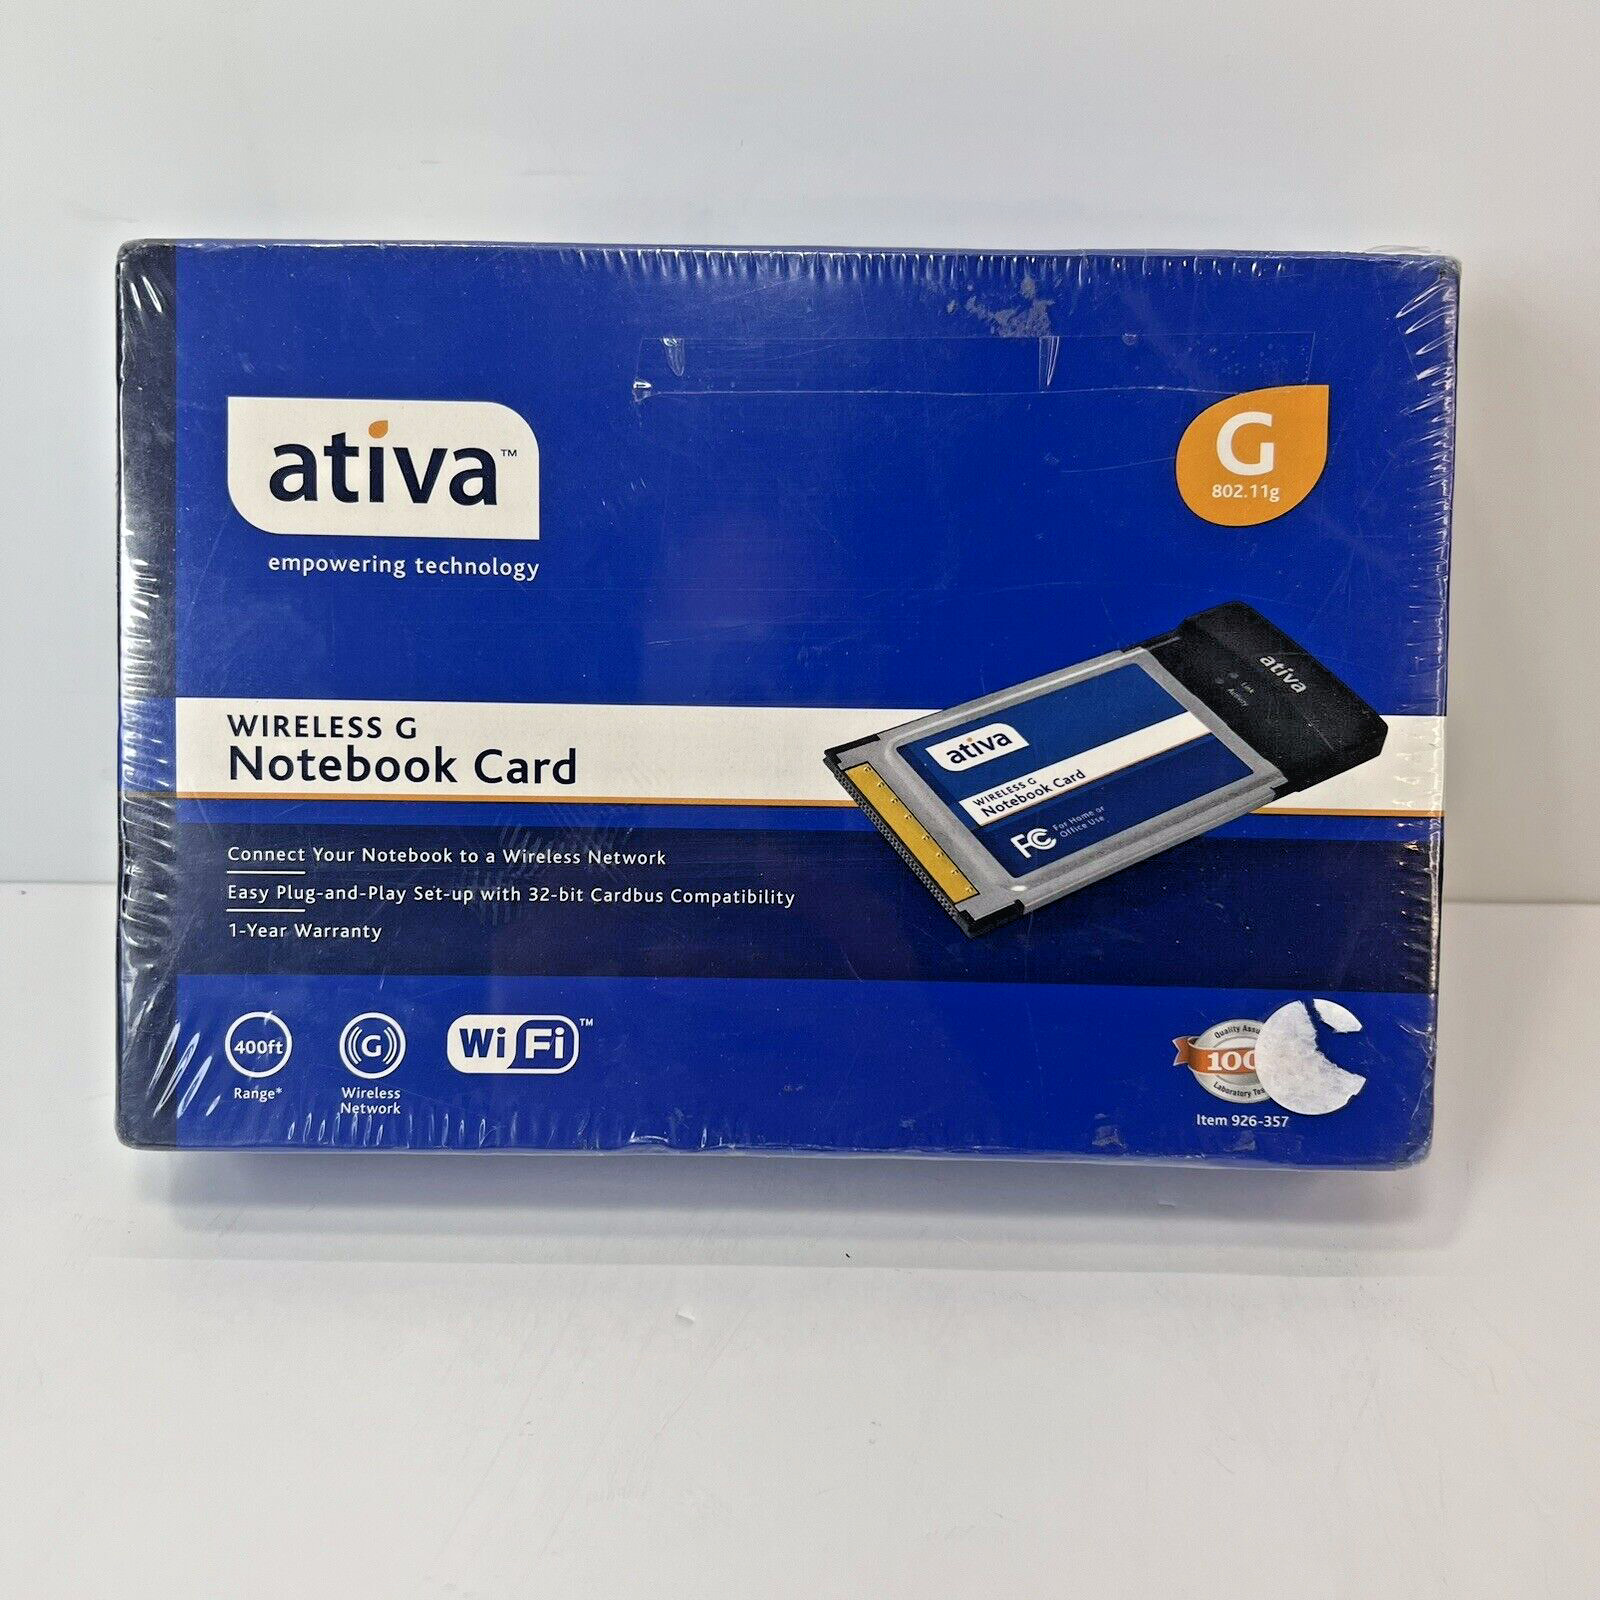 ATIVA Wireless G Notebook Card #926-357 32-bit 802.11g 400ft Range - New in Box